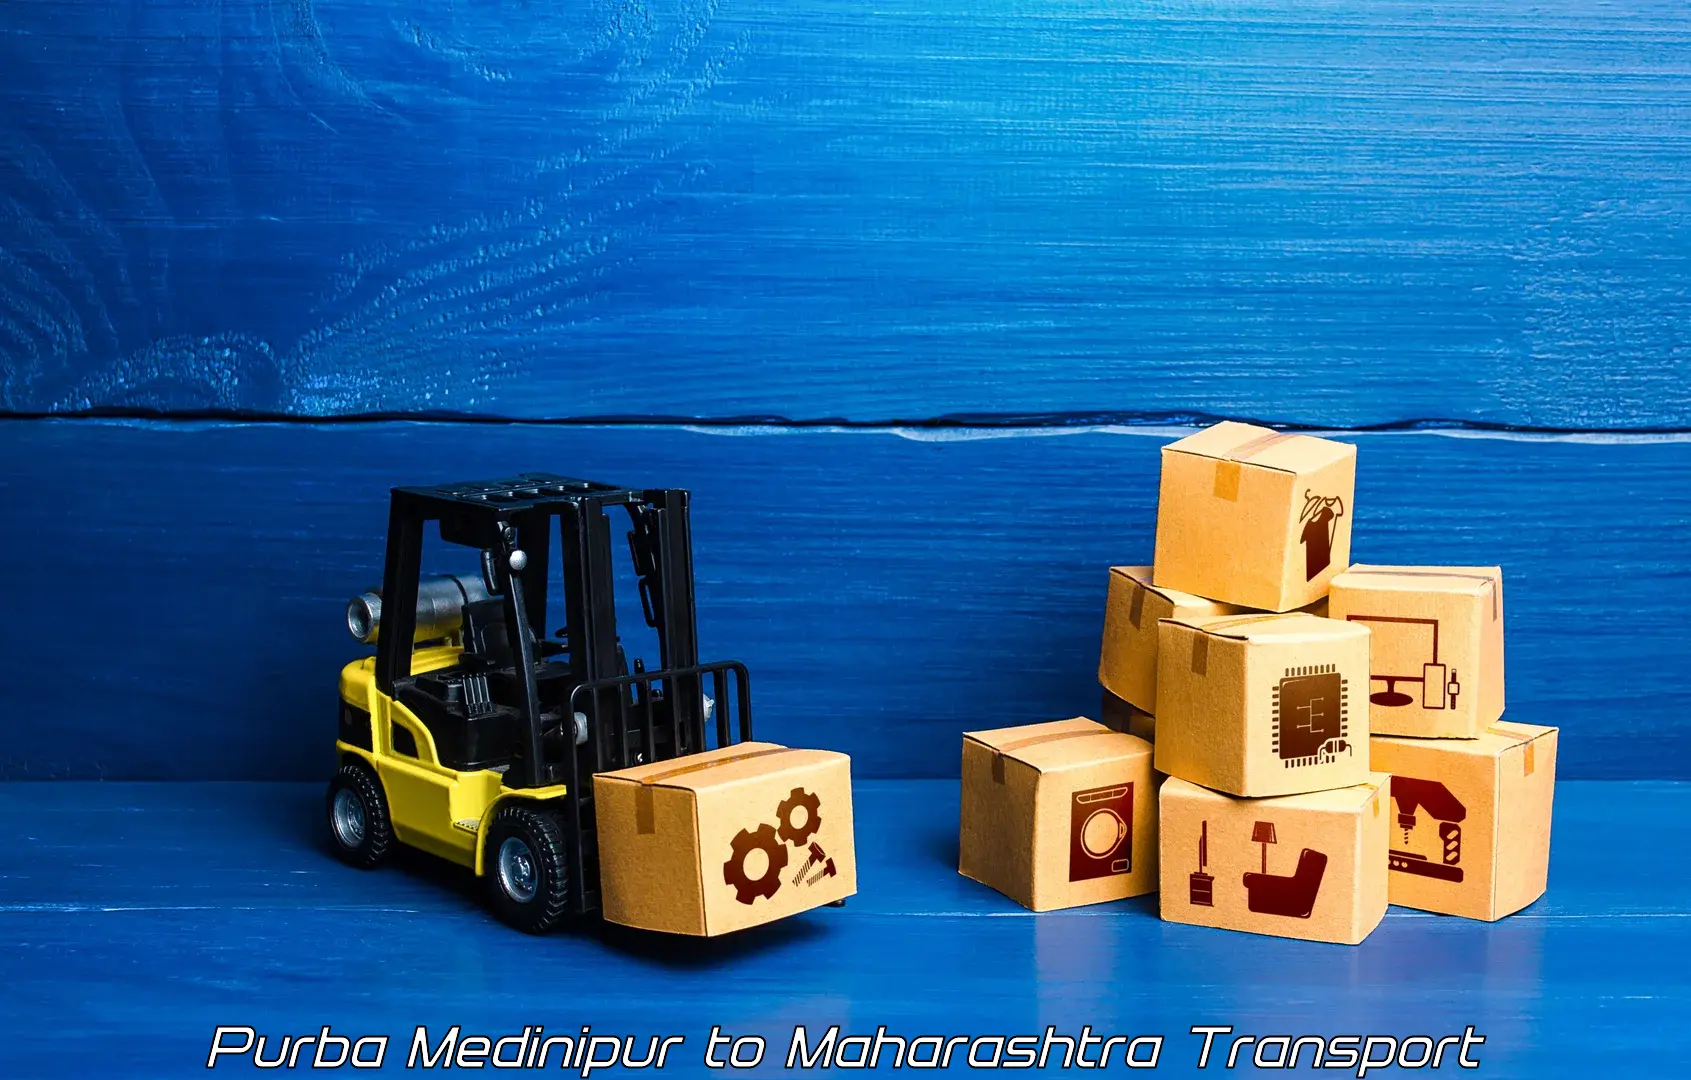 Truck transport companies in India Purba Medinipur to Bhoom